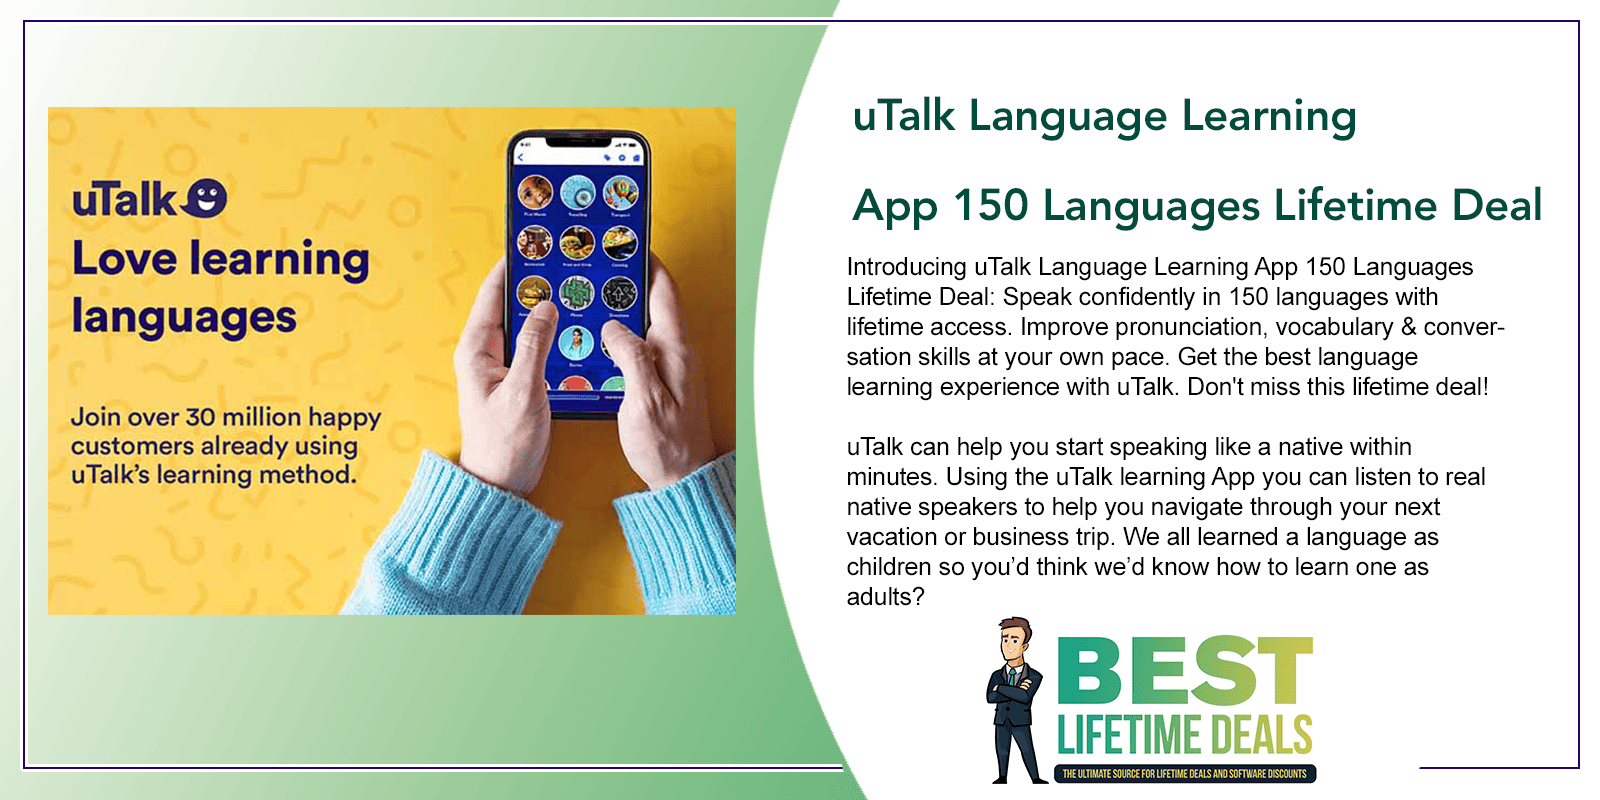 uTalk Language Learning App 150 Languages Lifetime Deal Featured Image